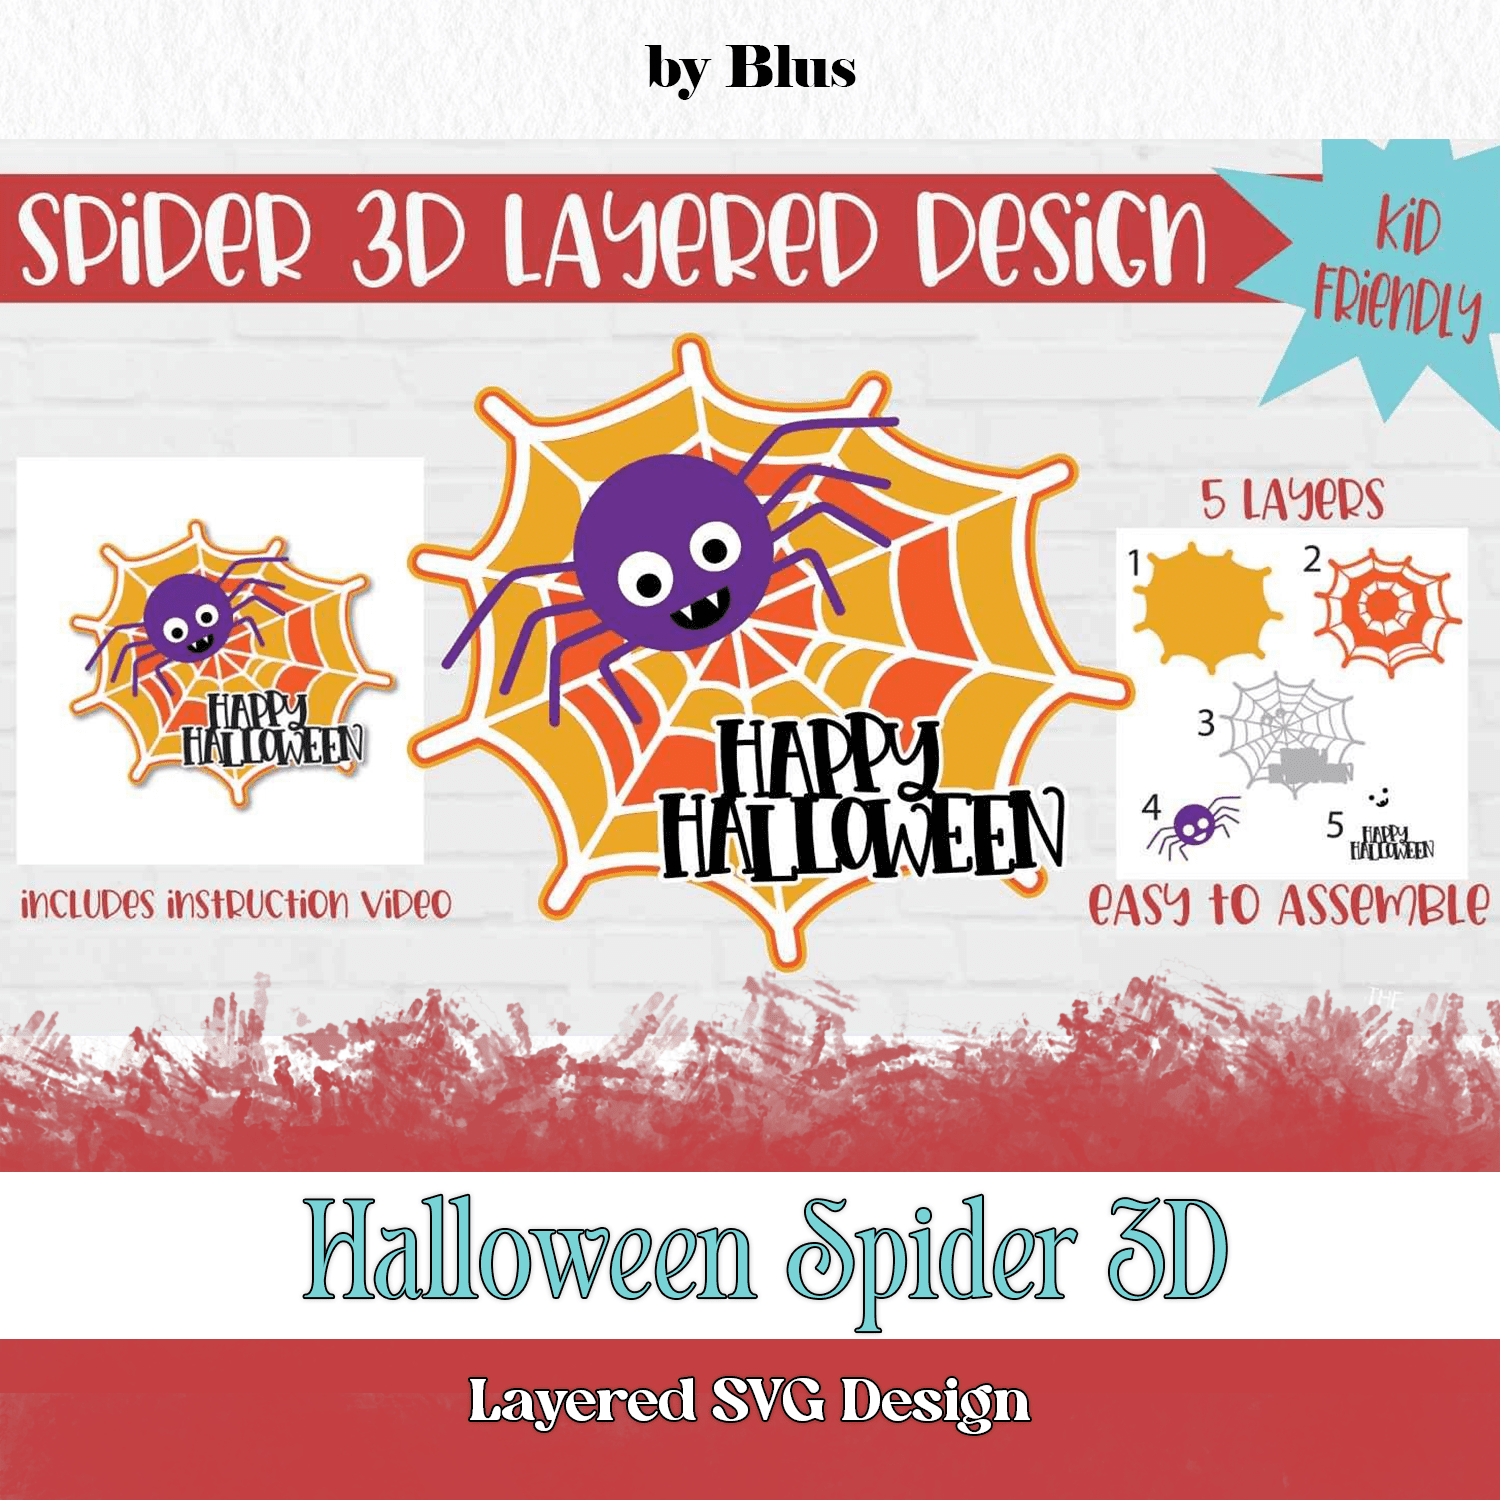 Halloween Spider 3D Layered SVG Design cover.